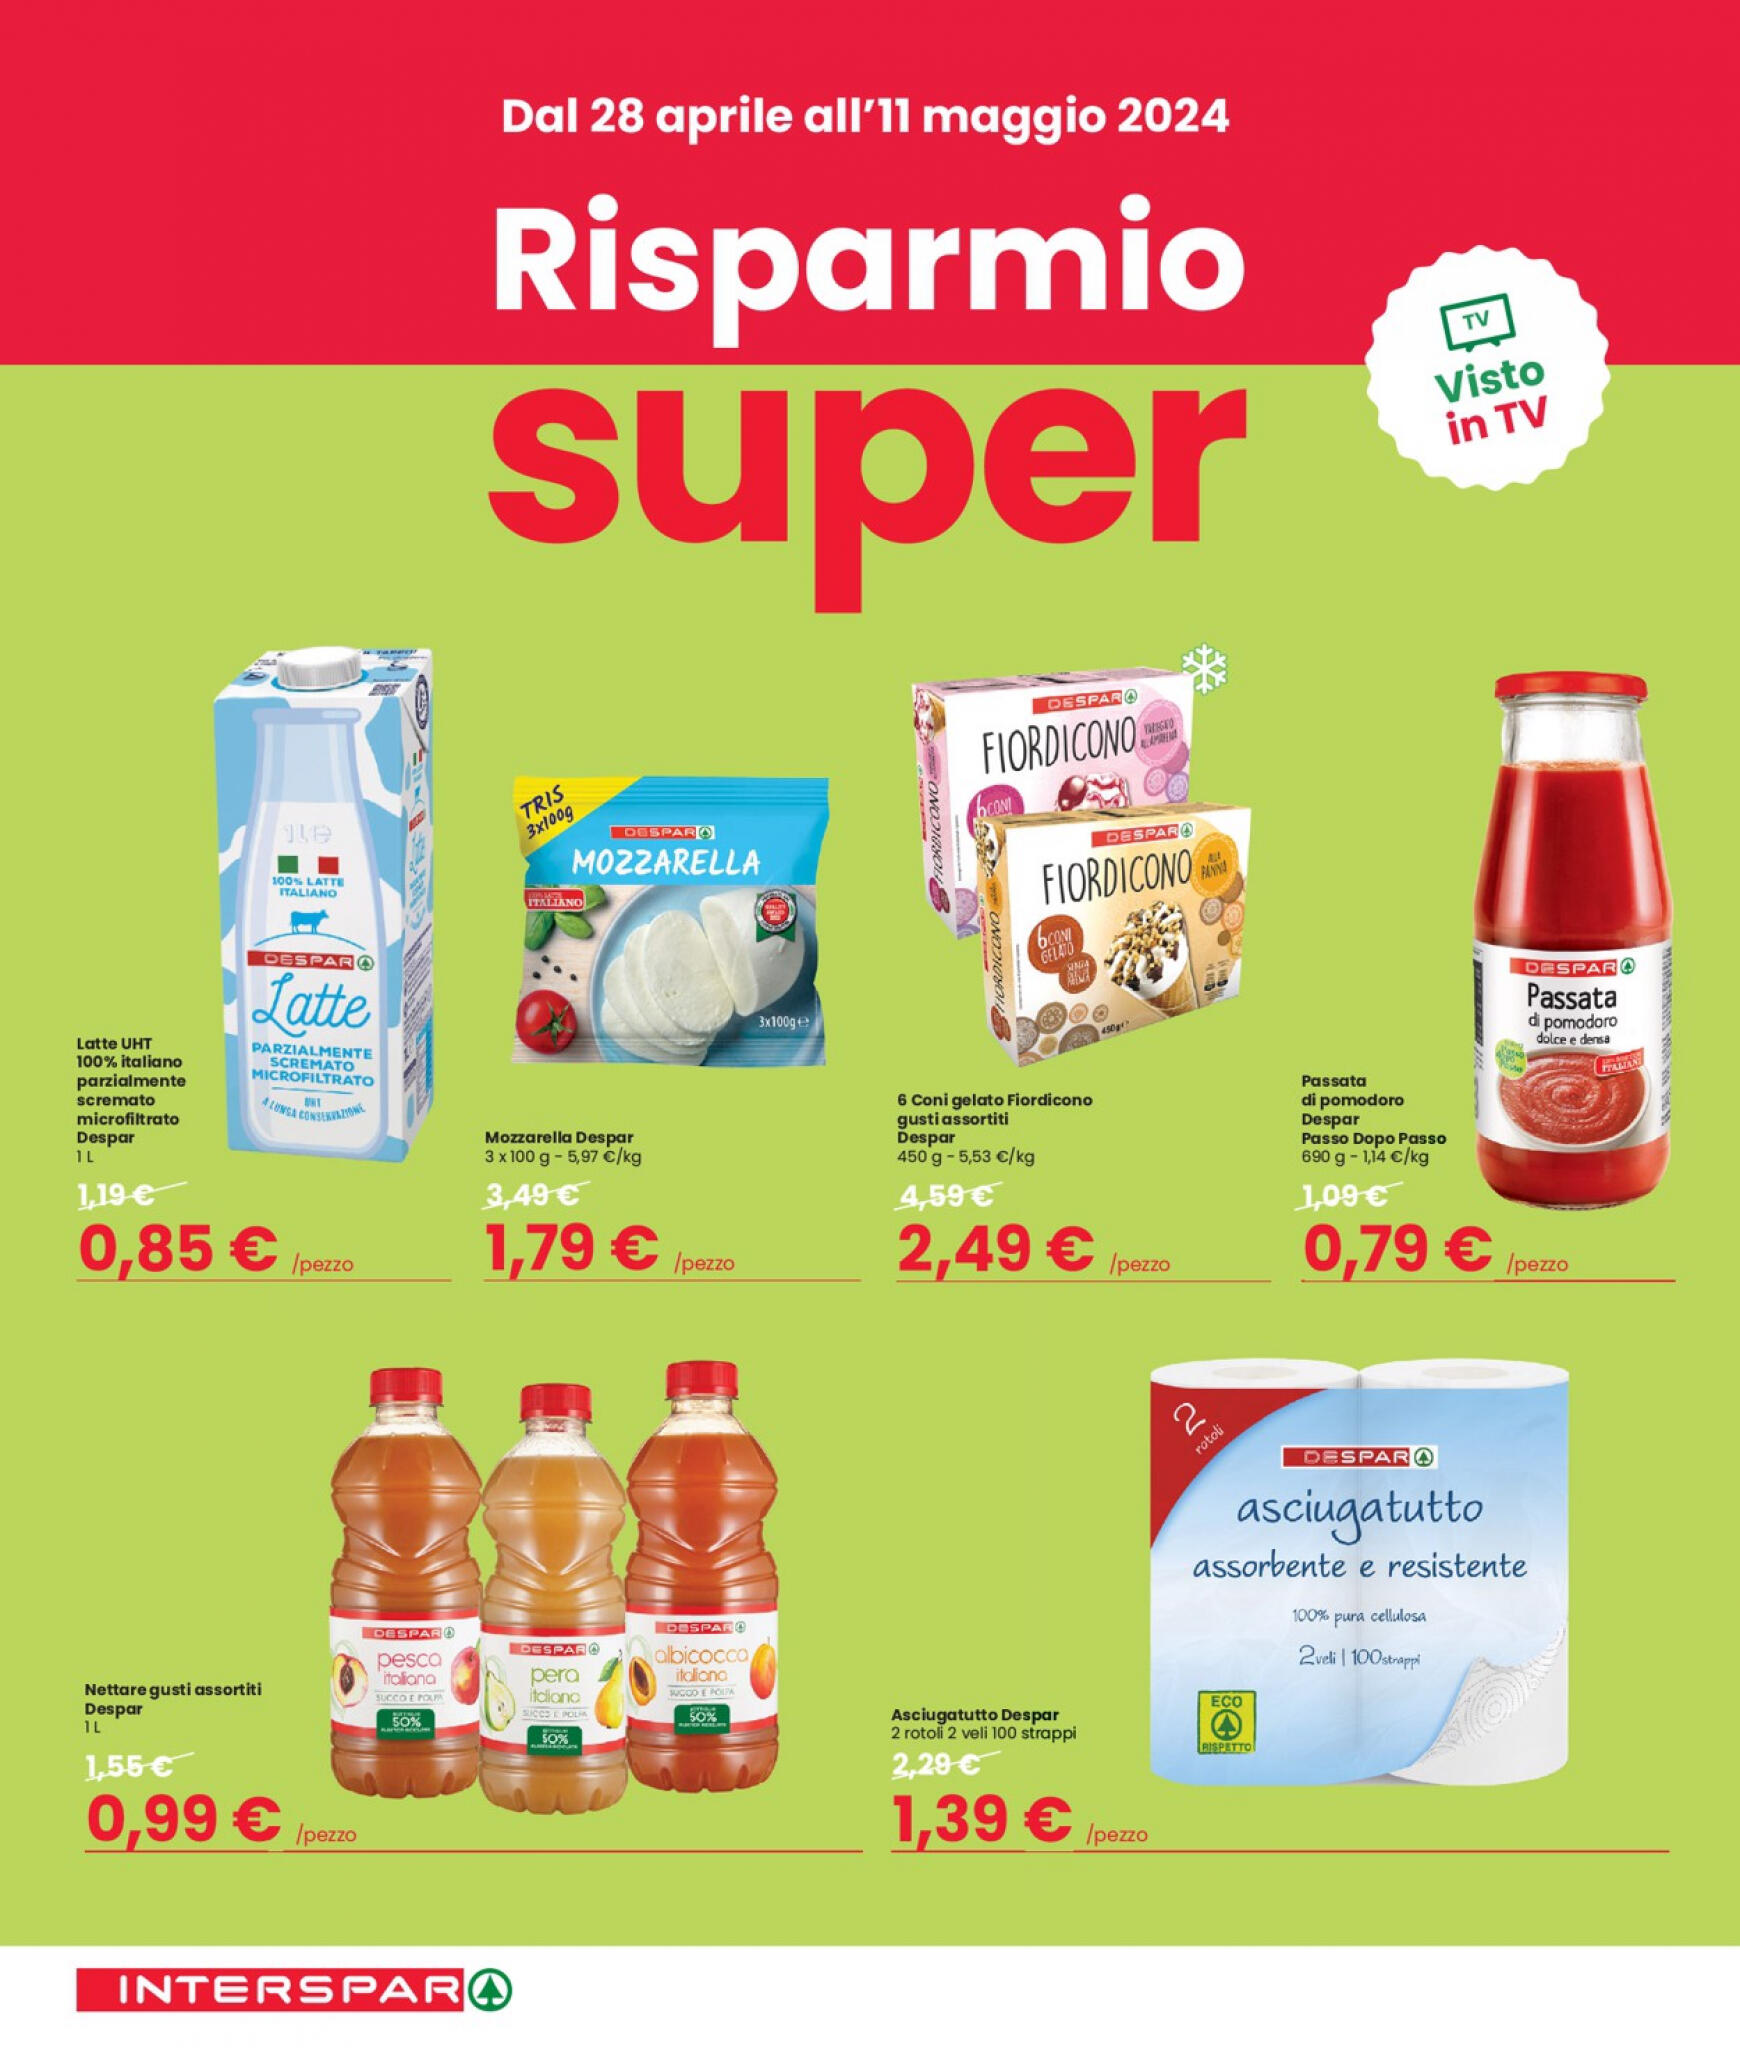 interspar - Nuovo volantino INTERSPAR - Risparmio Super 28.04. - 11.05. - page: 1